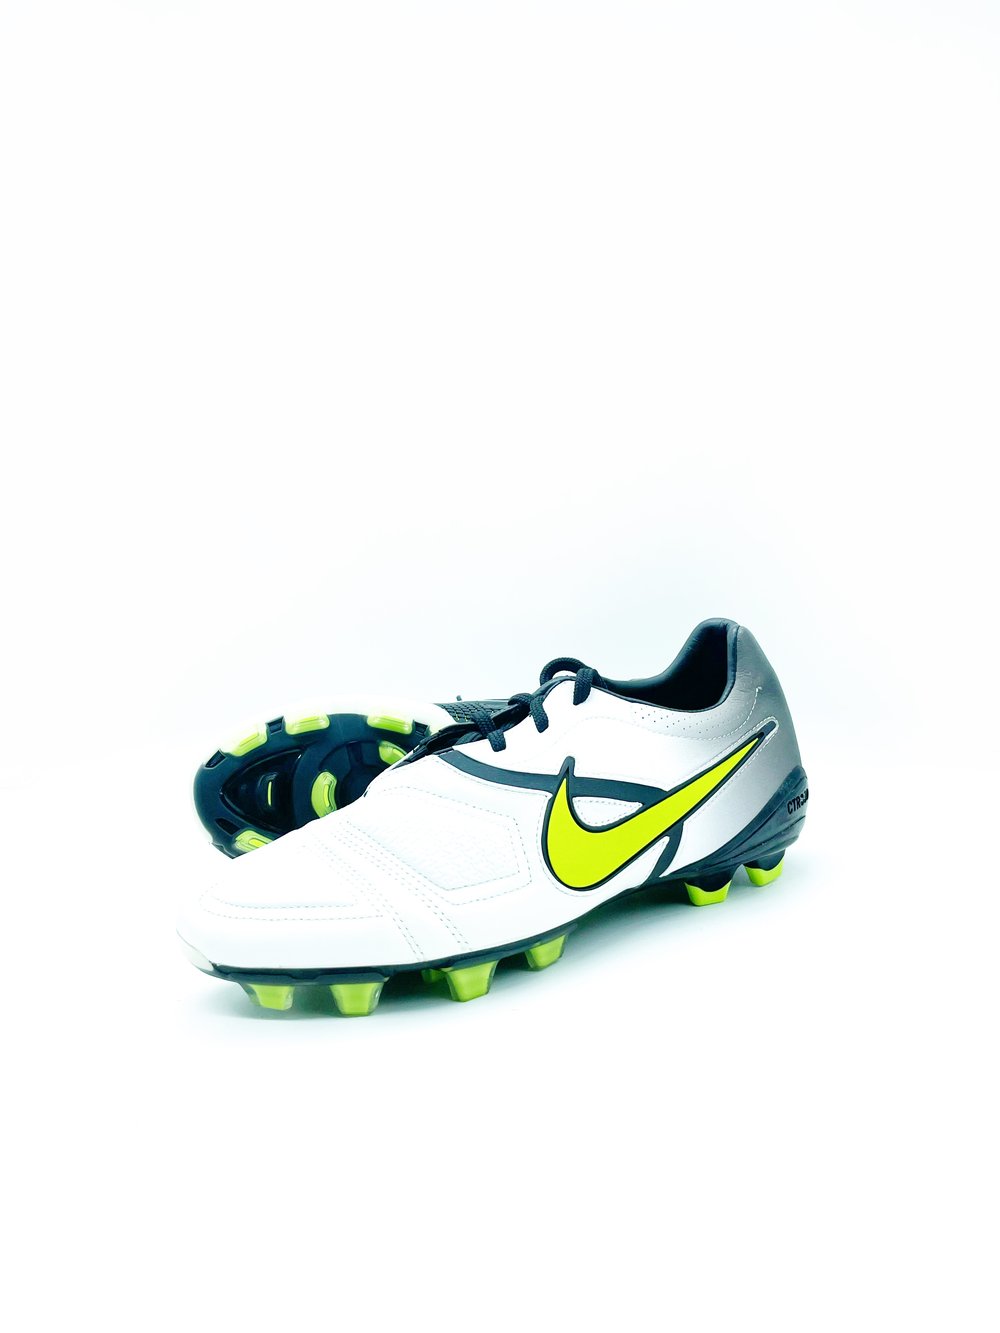 Image of Nike Ctr360 Tre FG WHITE 